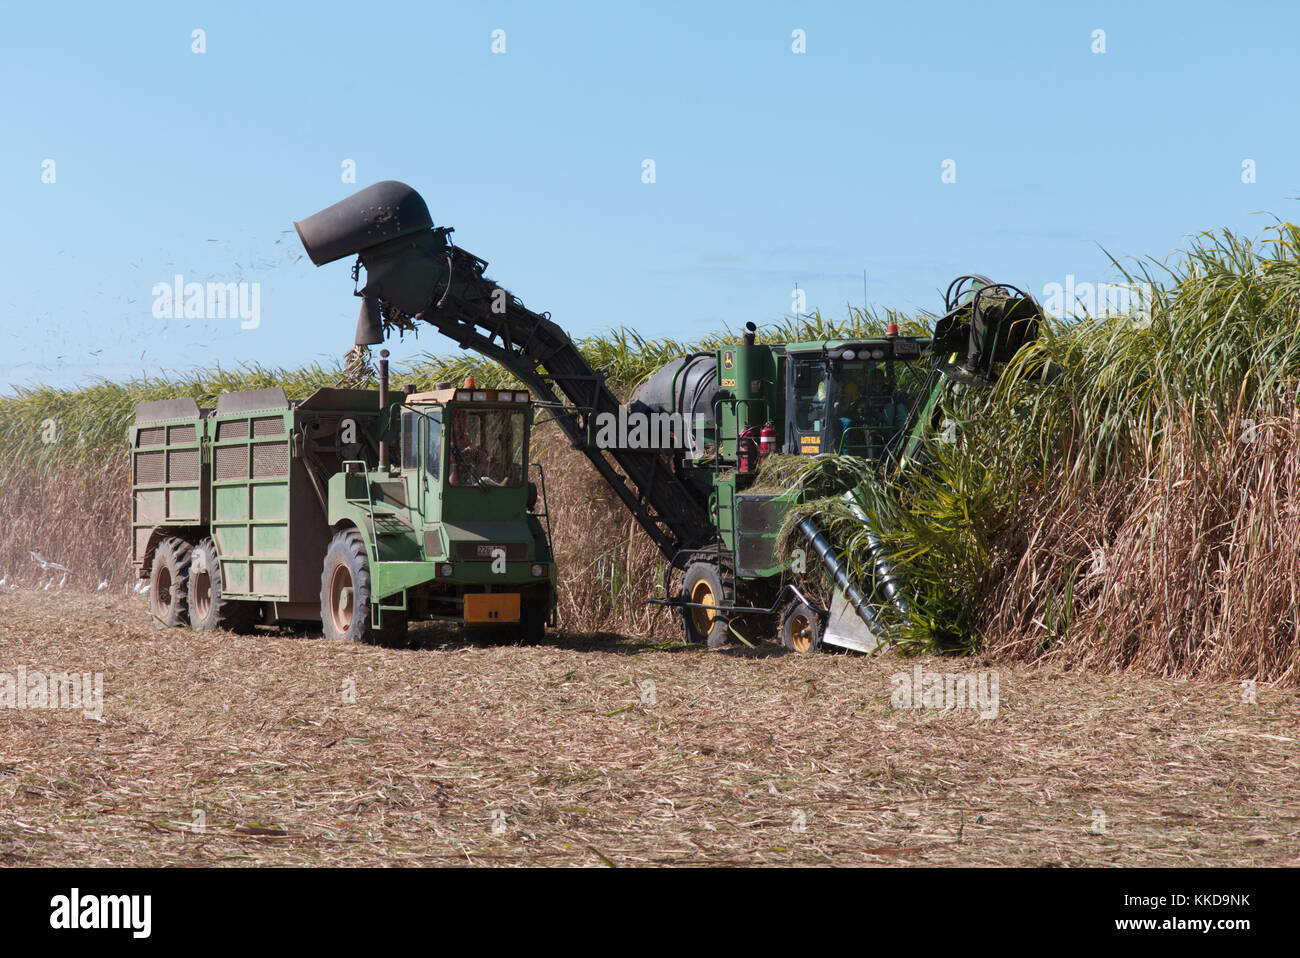 Mechanical Sugar Cane Harvesting machinery at work harvesting a crop near Bundaberg Queensland Australia Stock Photo